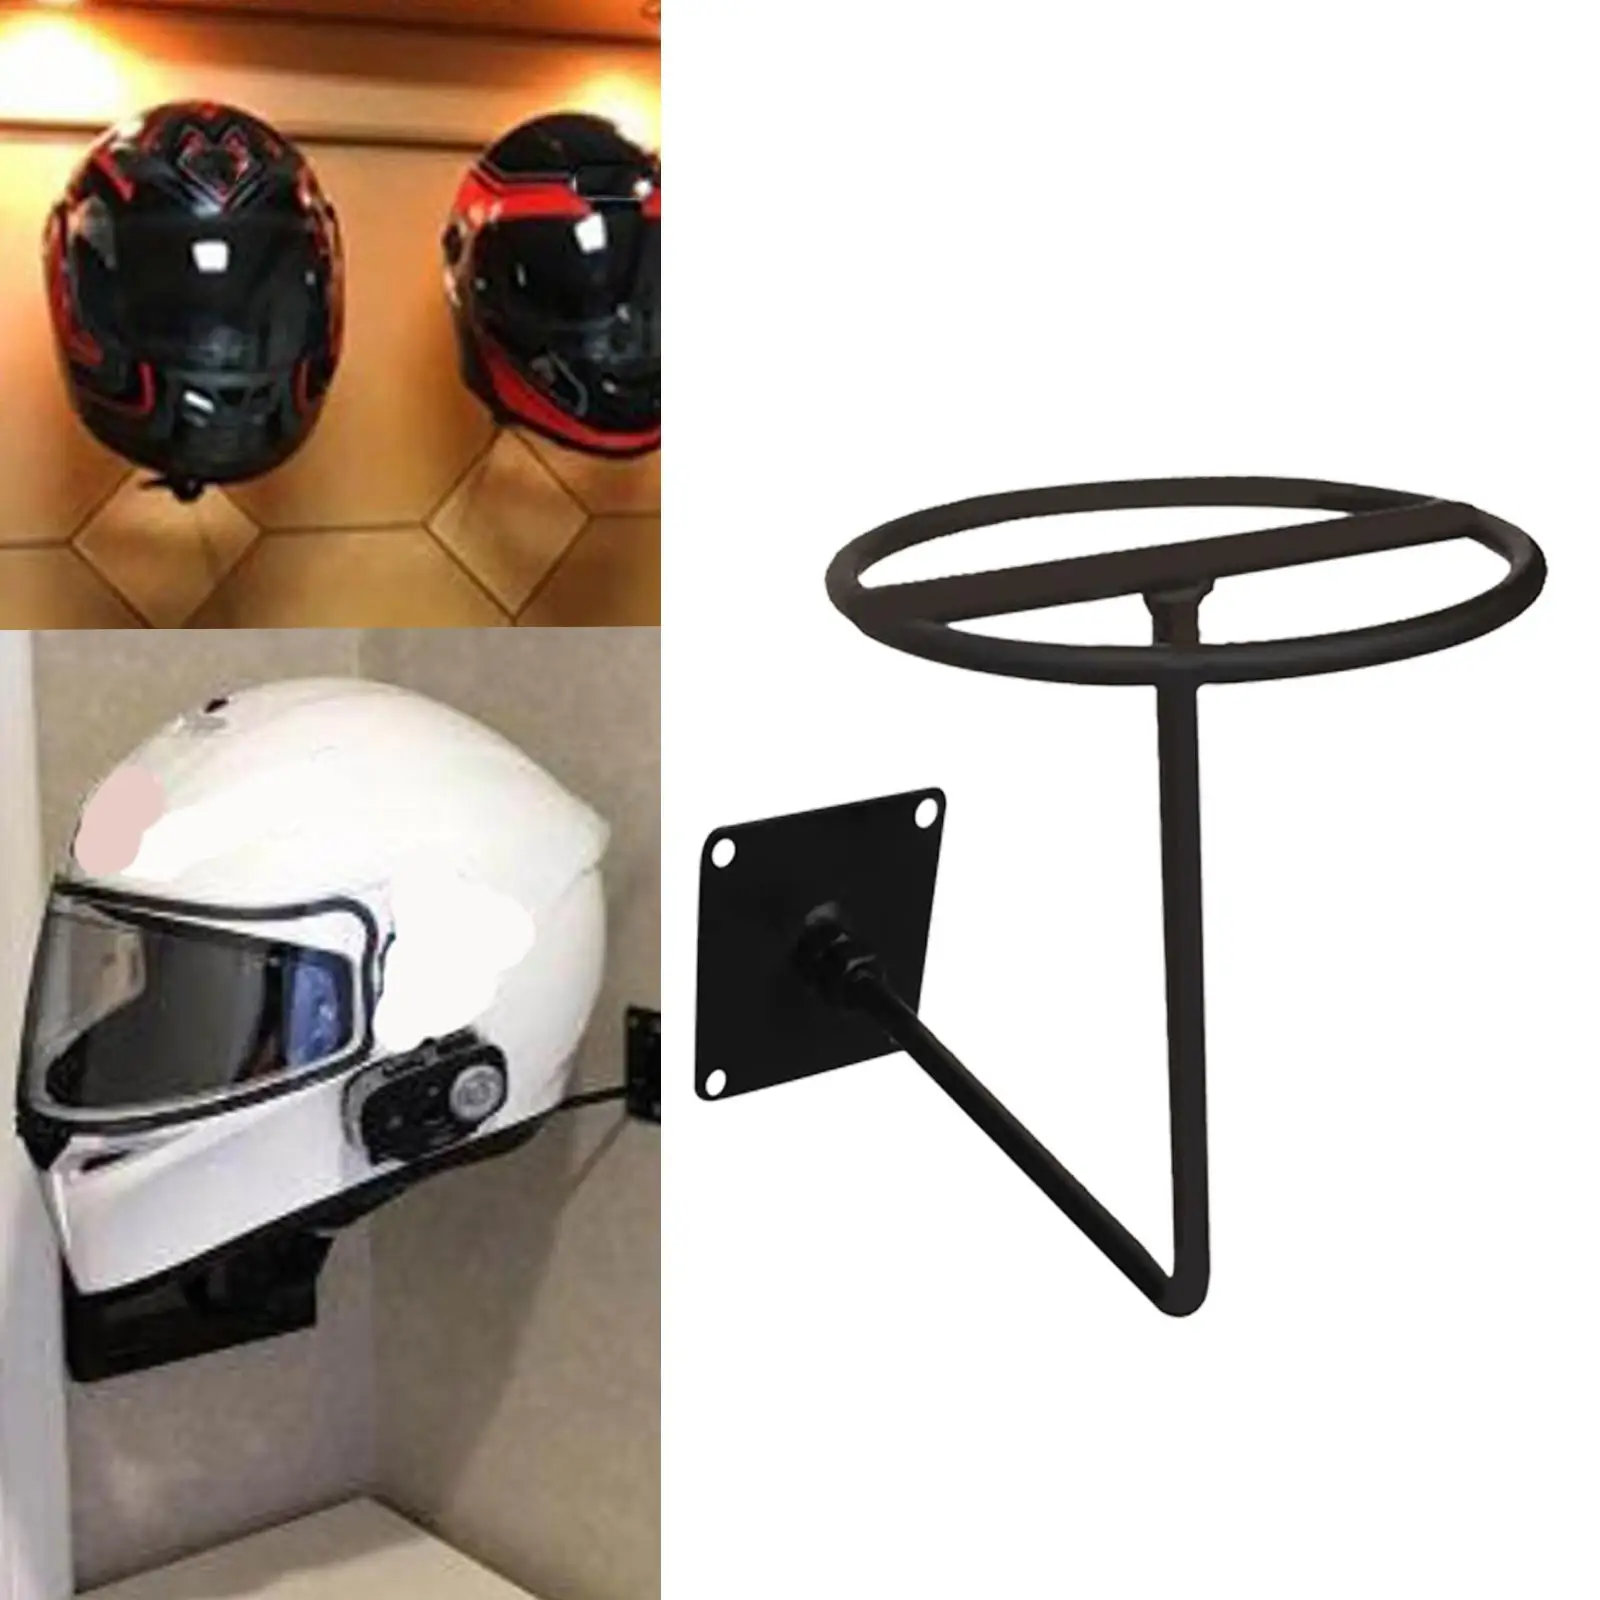 Wall Mounted Helmet Holder, Metal Multifunctional Motorcycle Accessories Hook Display Rack, for Hats Coats Garage